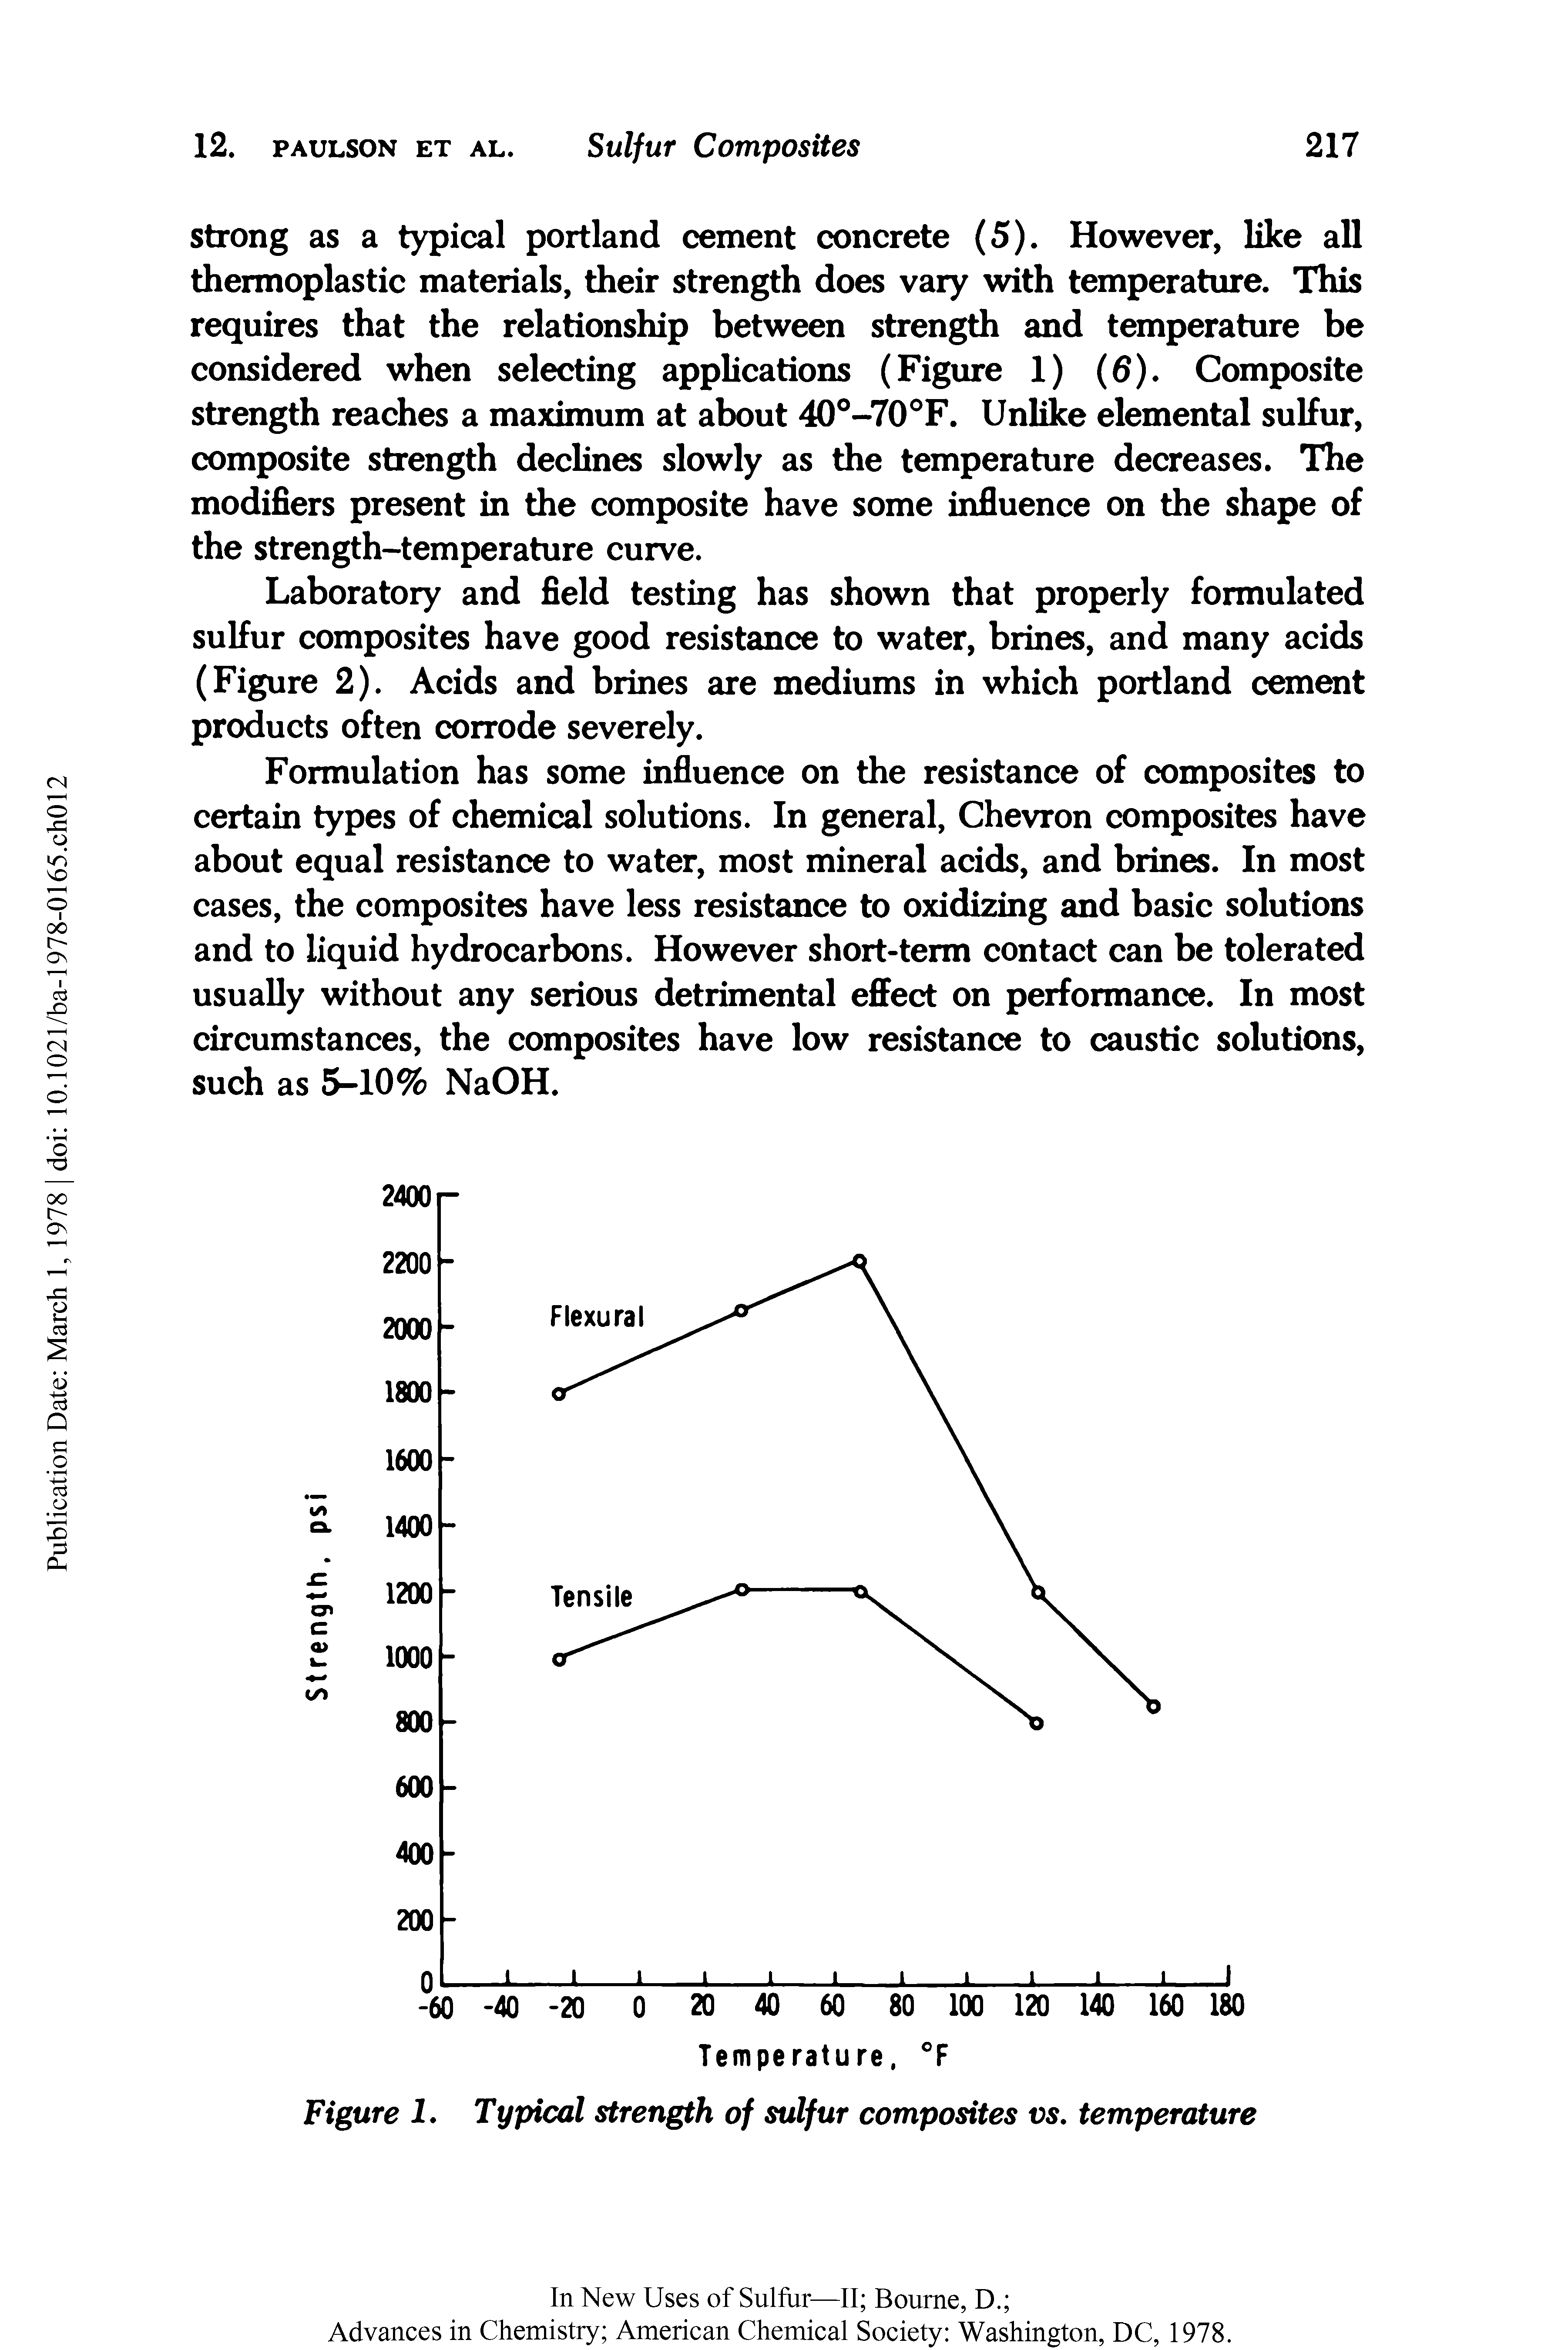 Figure I. Typical strength of sulfur composites vs. temperature...